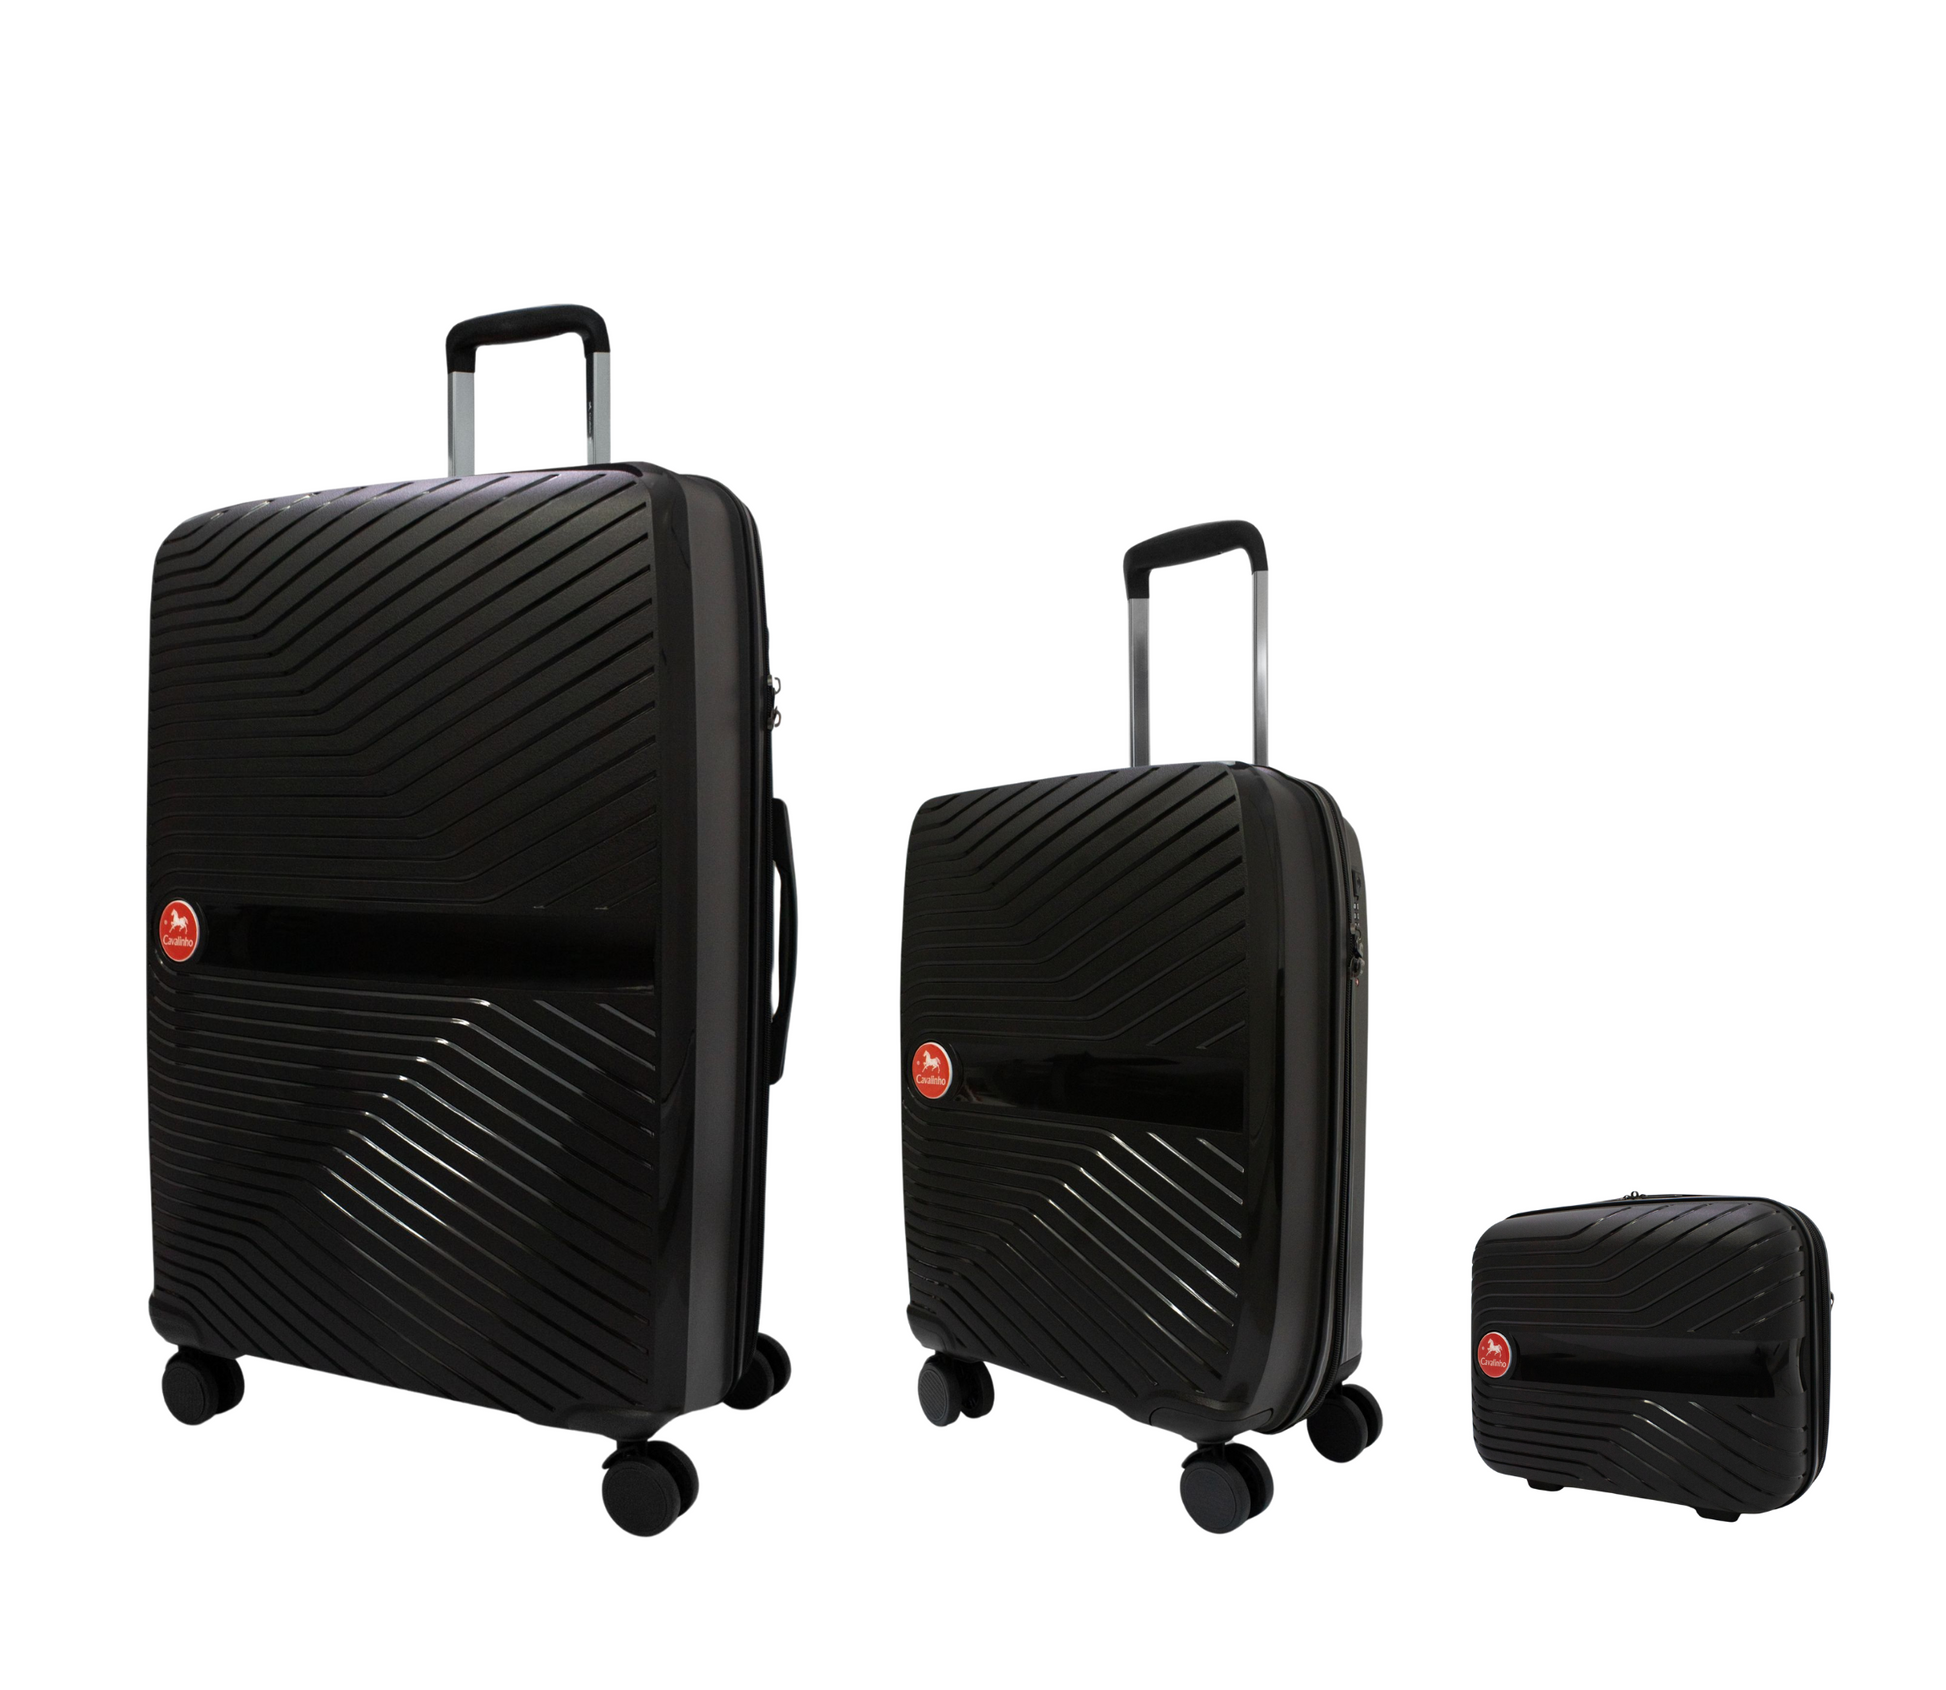 Cavalinho Colorful 3 Piece Luggage Set (15", 19" & 28") - Black Black Black - 68020004.010101.S151928._2